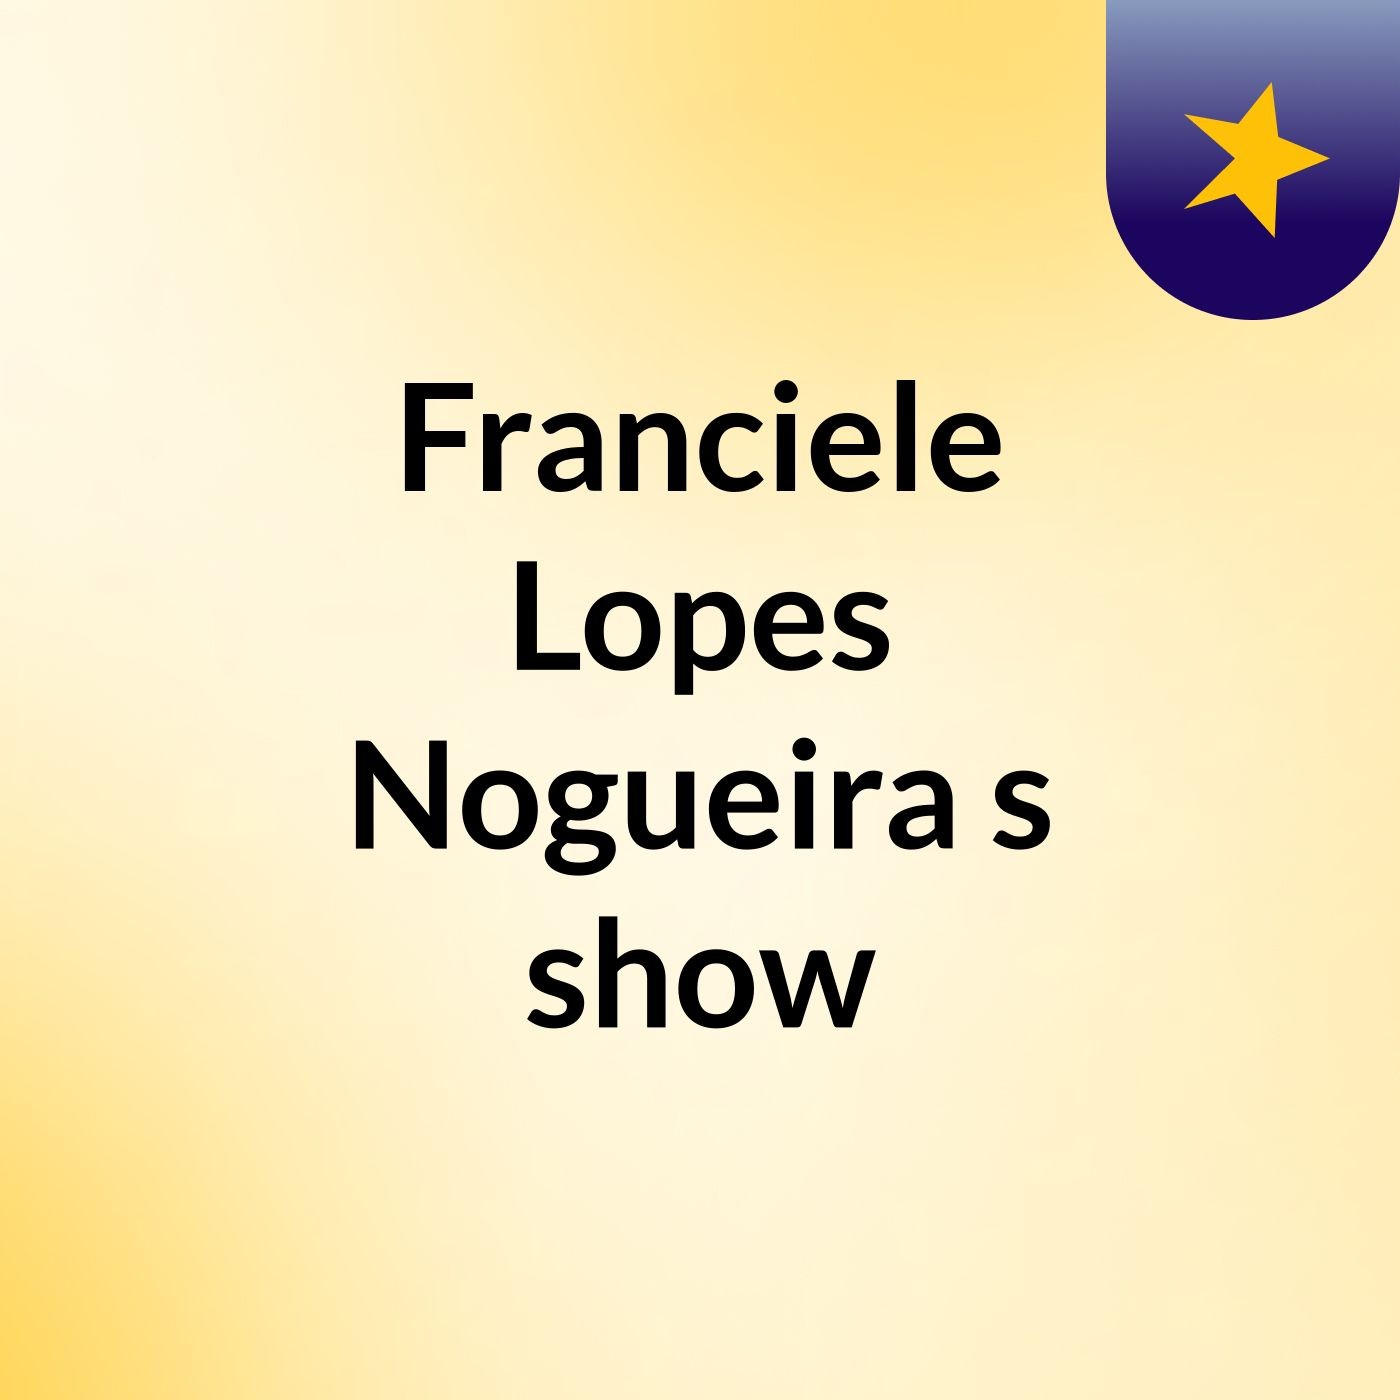 Franciele Lopes Nogueira's show